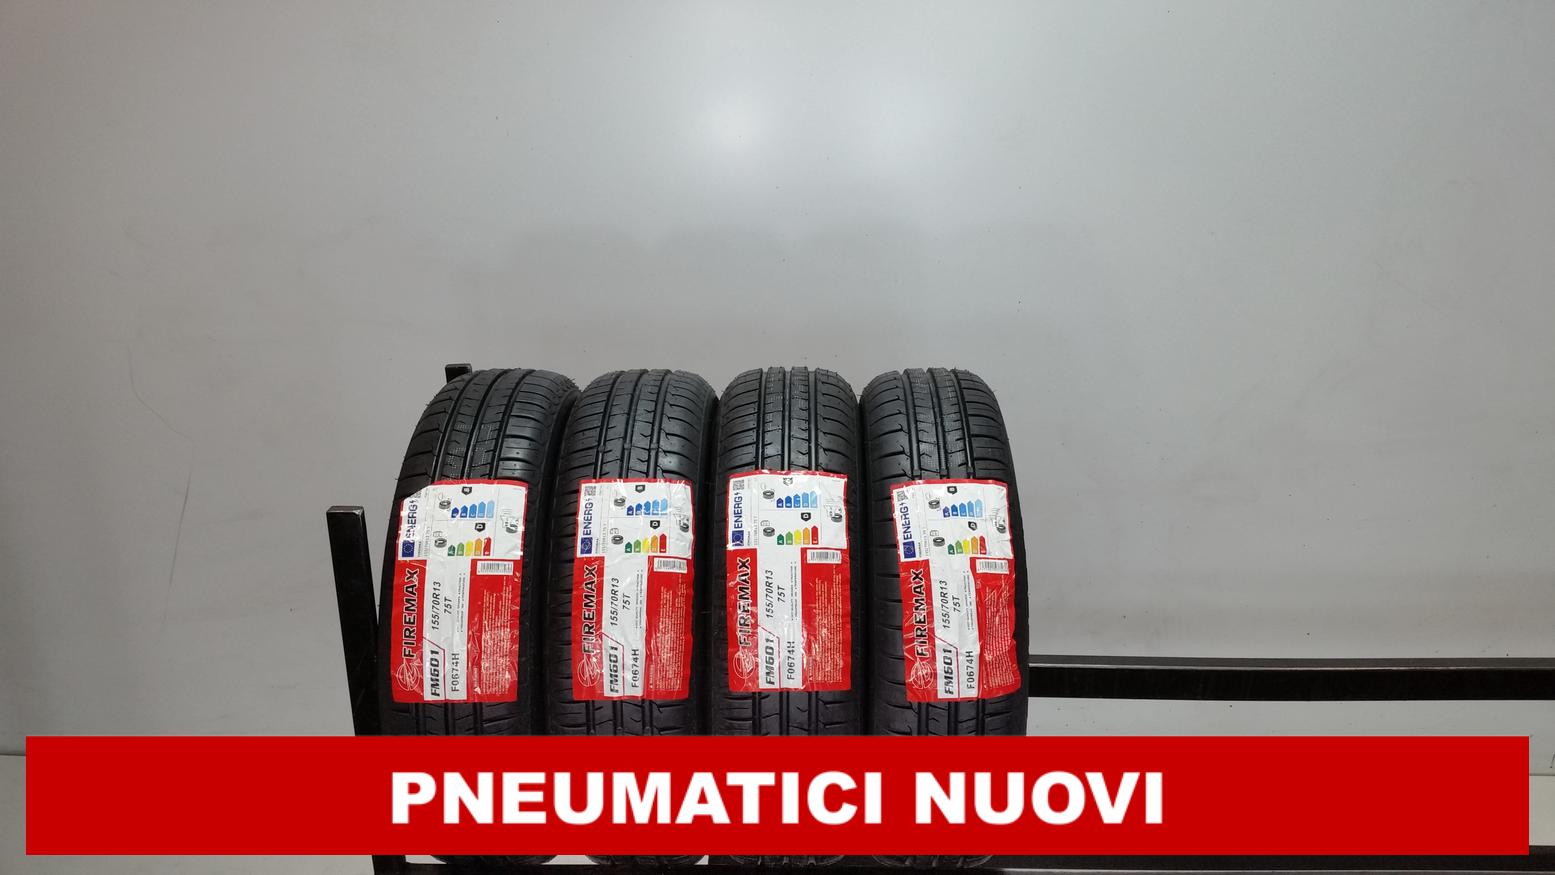 PNEUMATICI NUOVI Firemax 155/70 R13 75T 